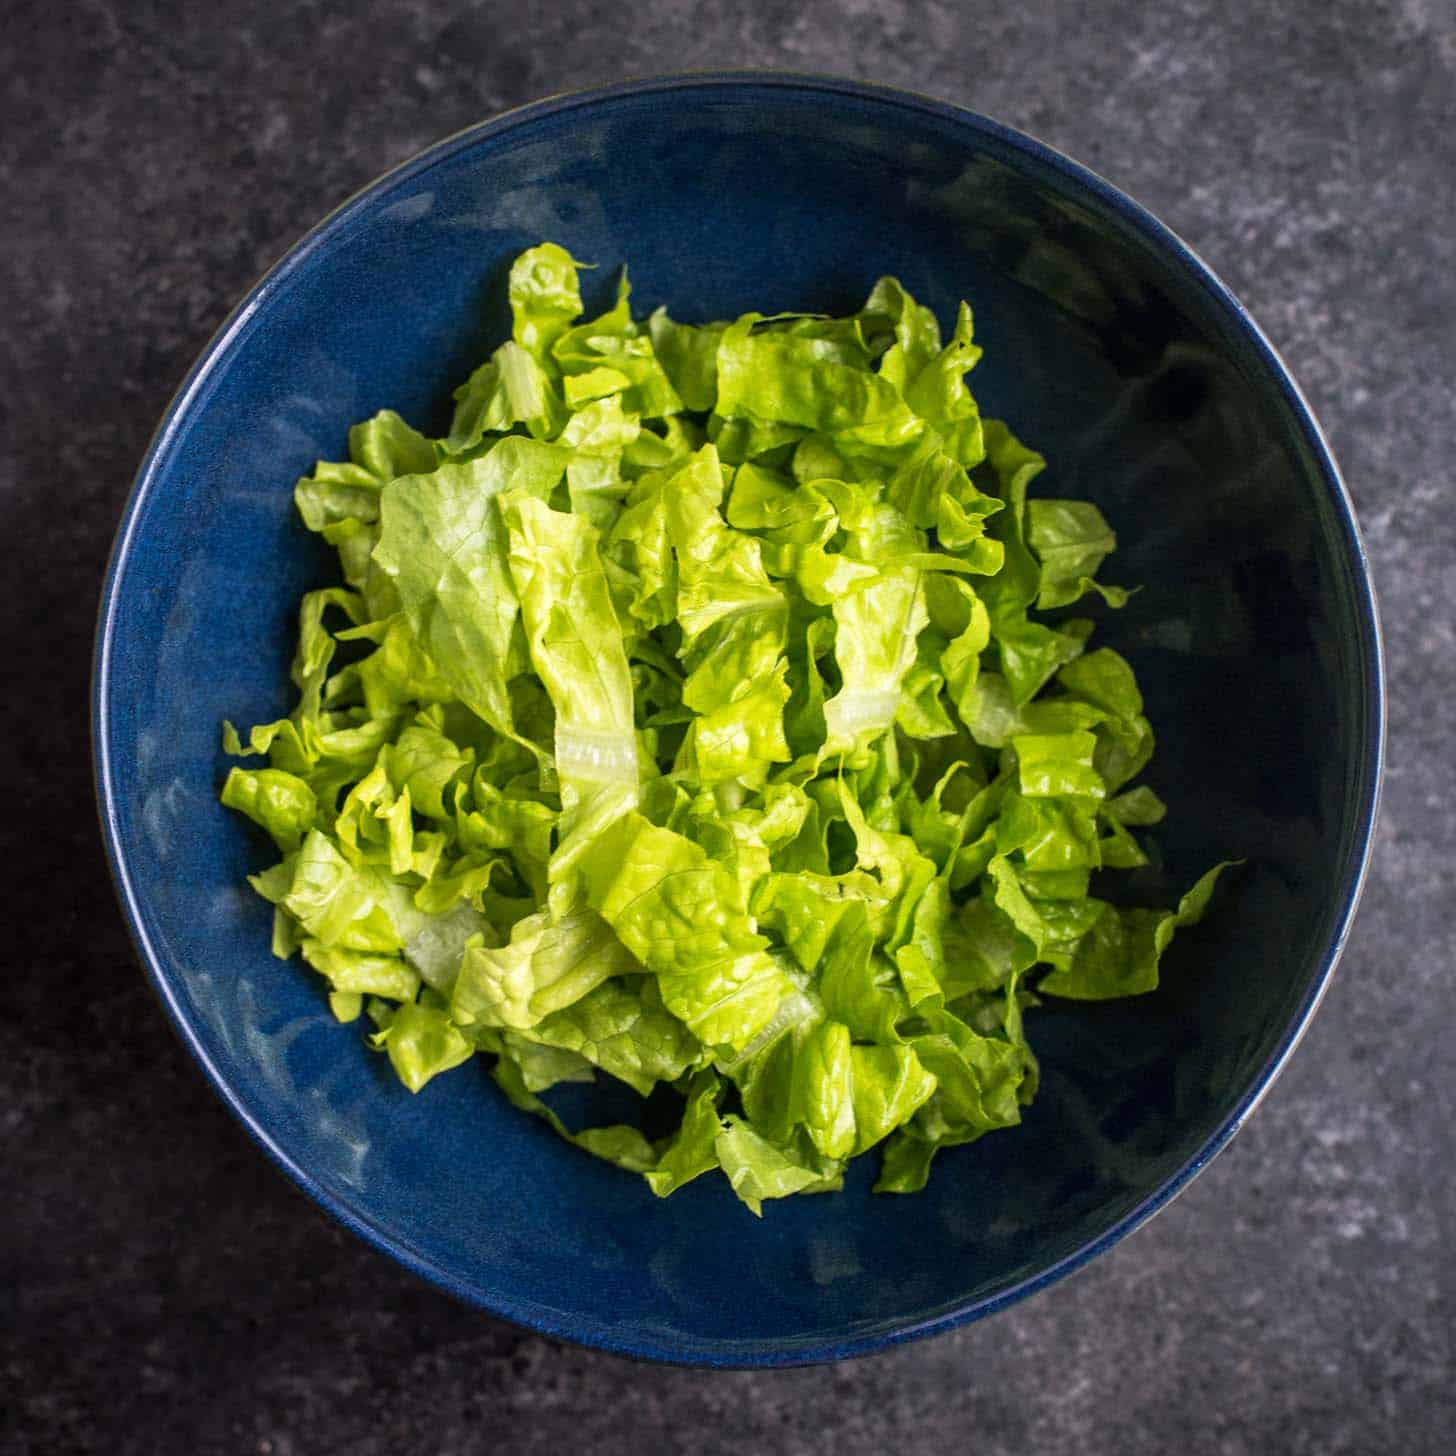 chopped lettuce in a blue bowl